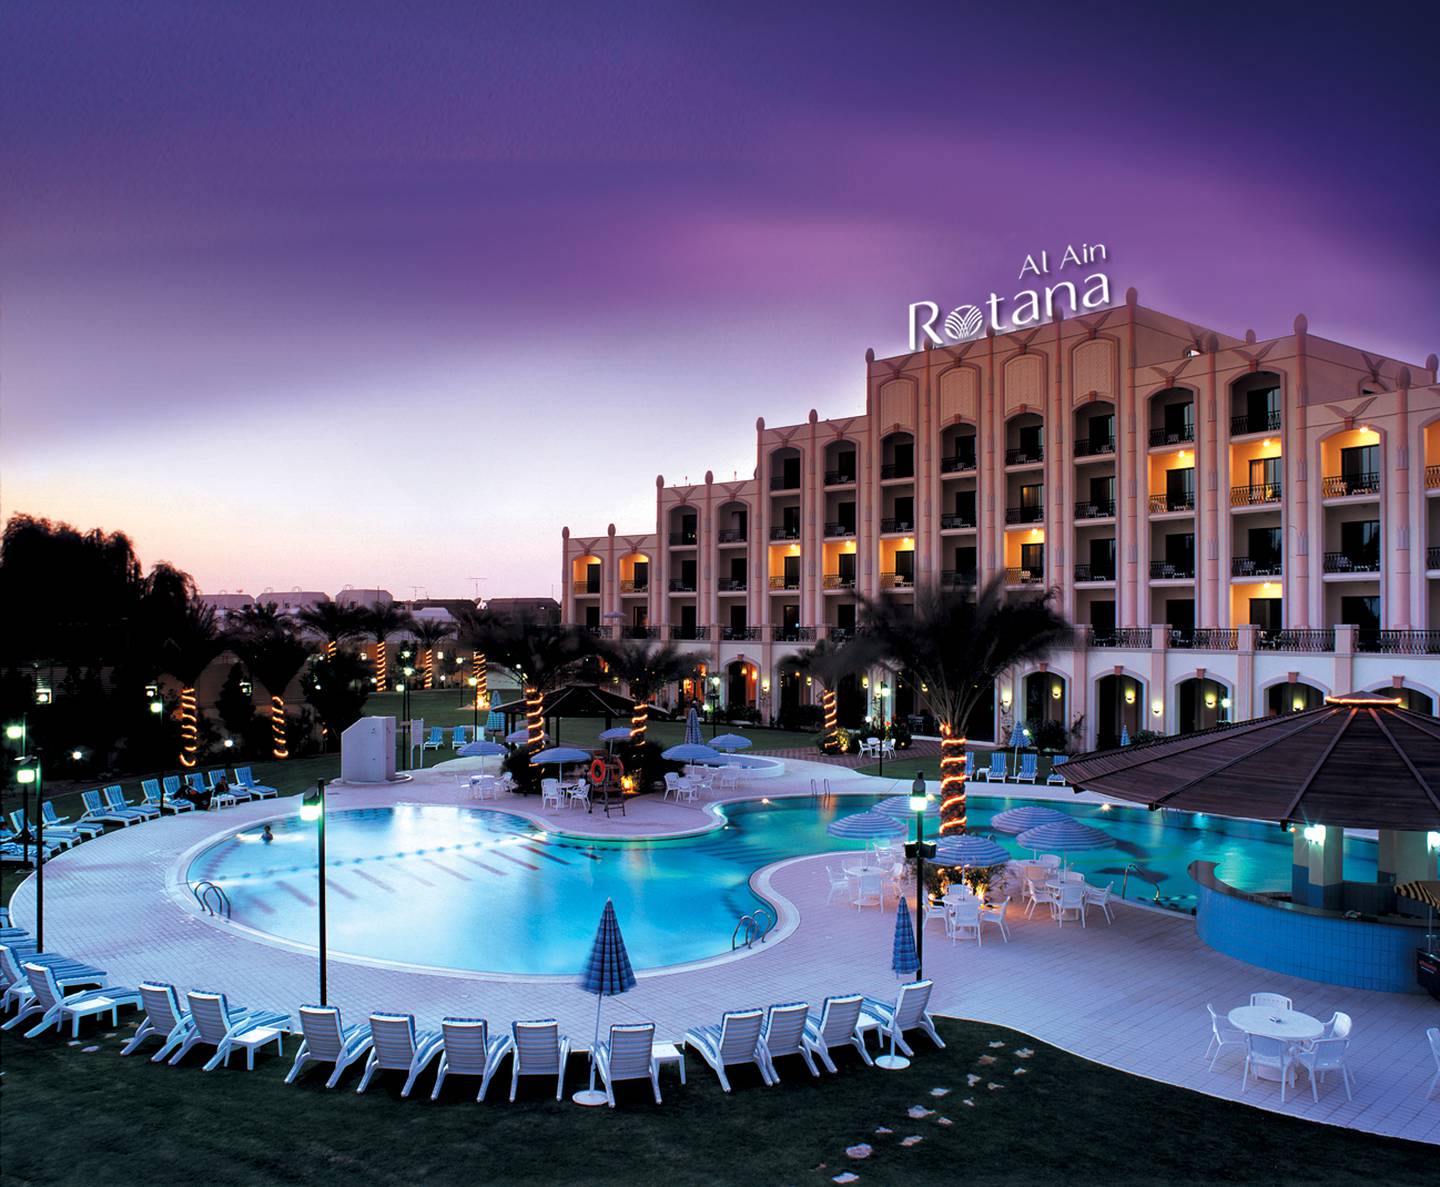 A handout photo of Al AIn Rotana hotel in Al Ain (Courtesy: Al Ain Rotana)